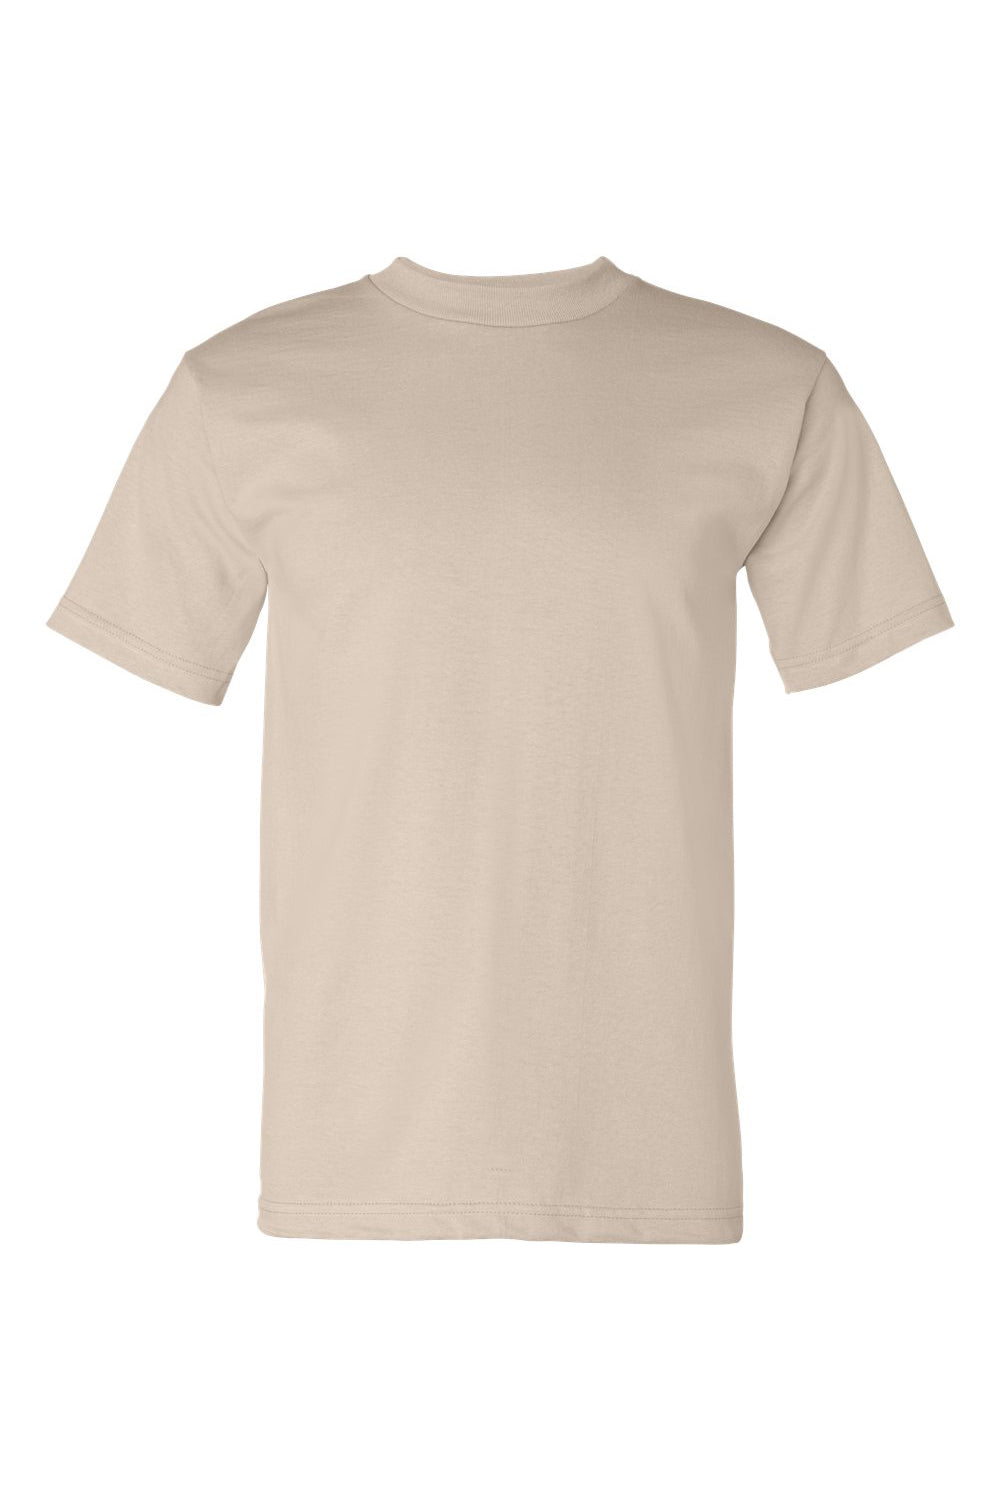 Bayside BA5100 Mens USA Made Short Sleeve Crewneck T-Shirt Sand Flat Front